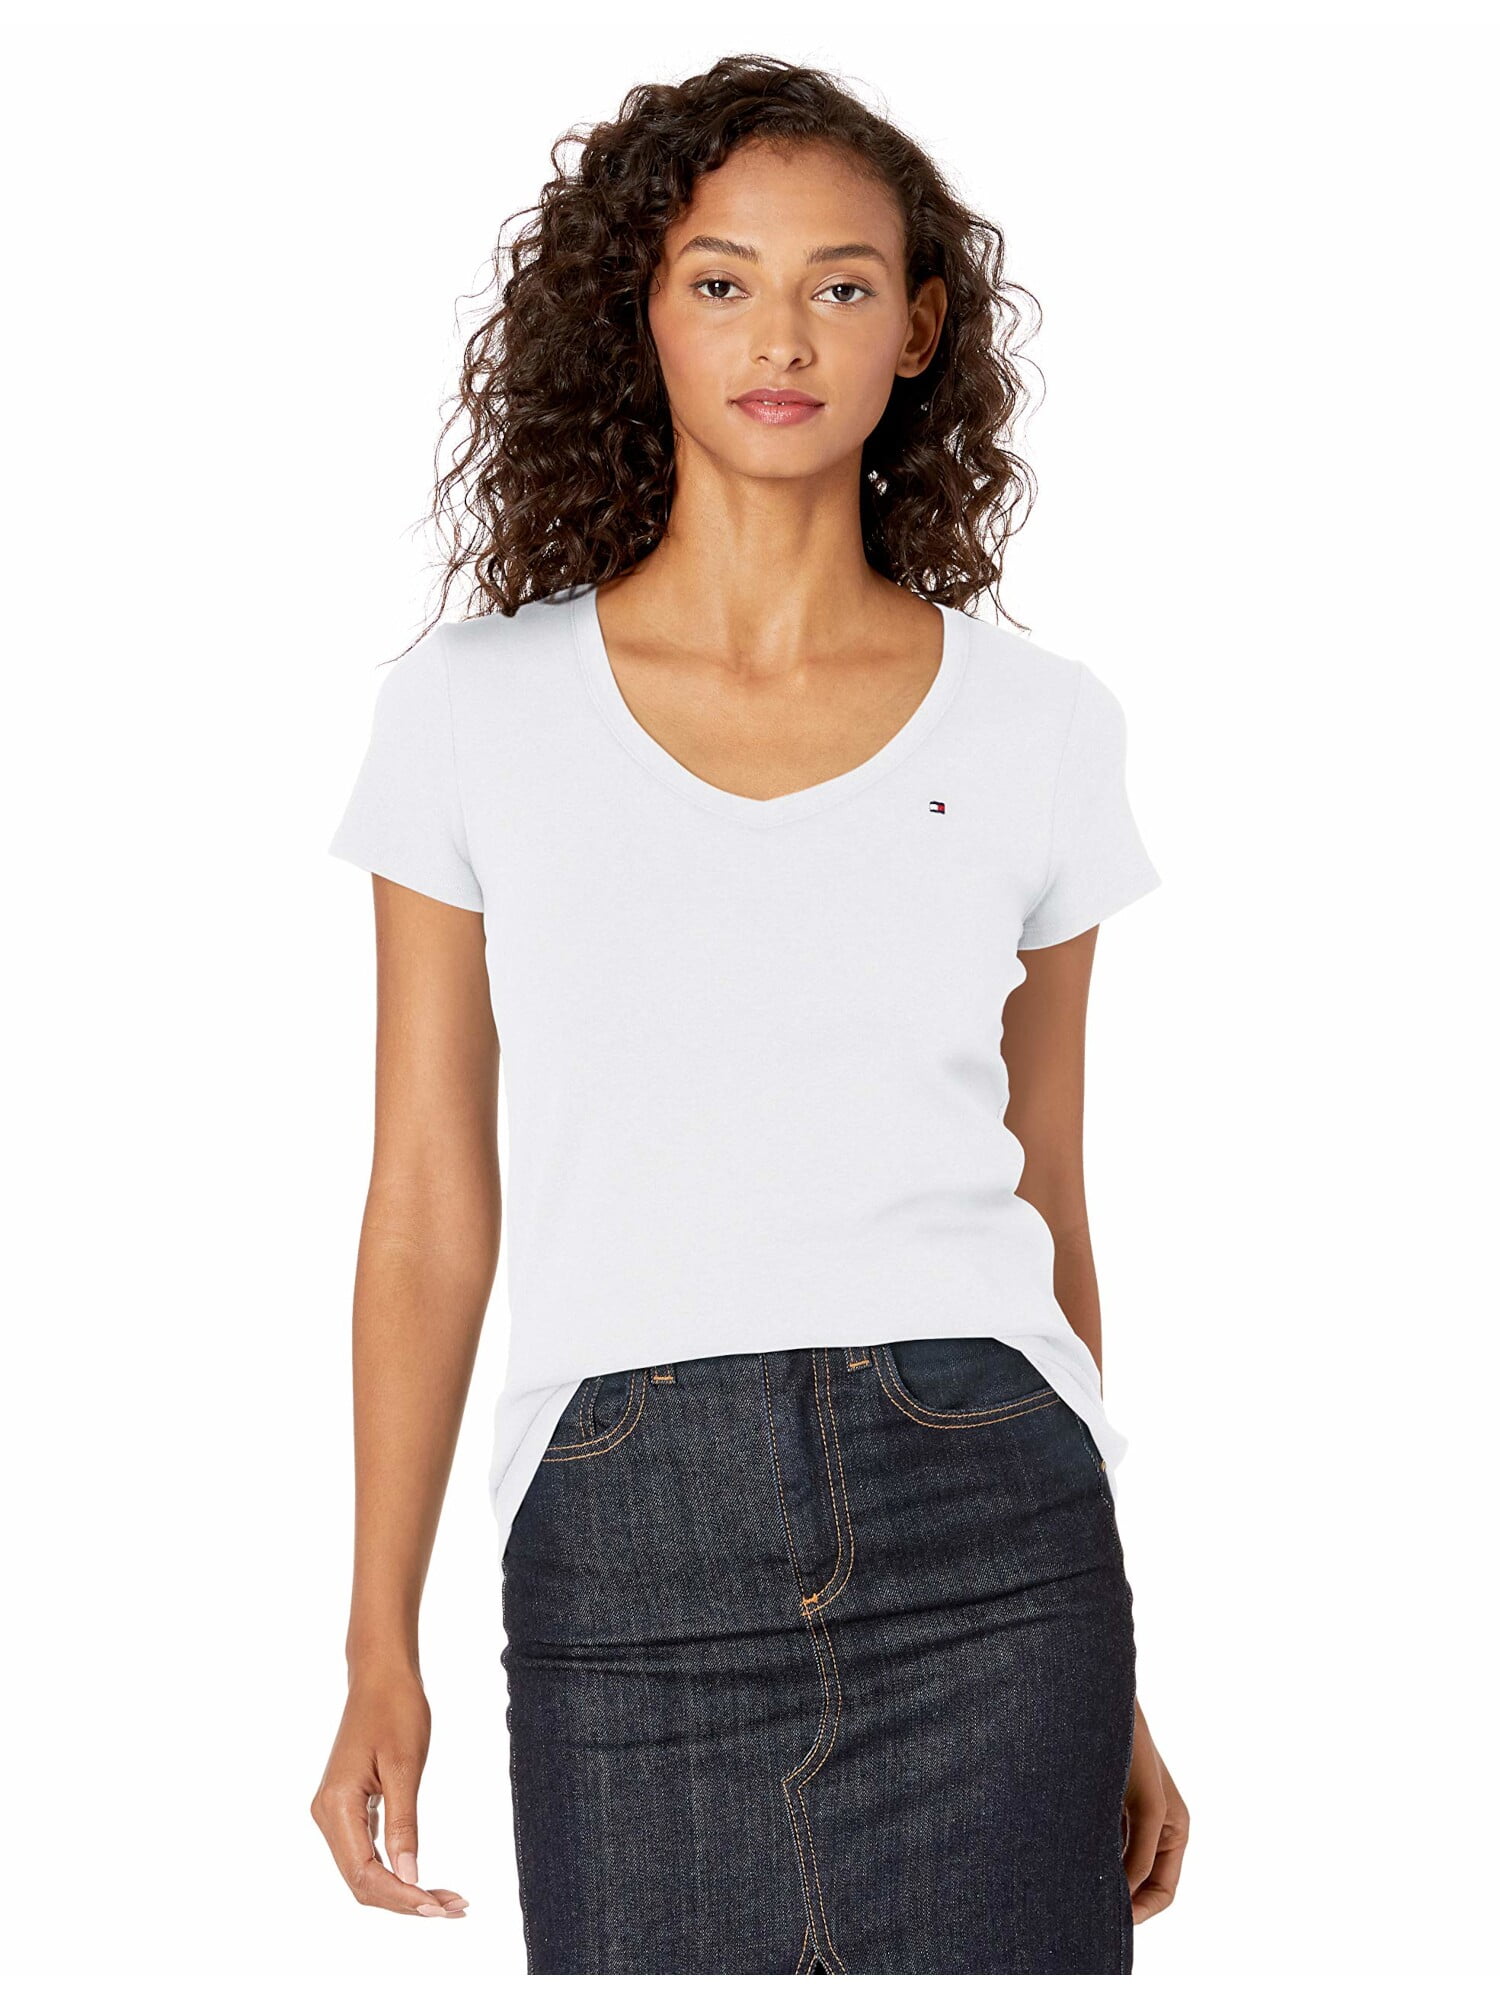 steeg Geroosterd . TOMMY HILFIGER Womens White T-Shirt Size: L - Walmart.com